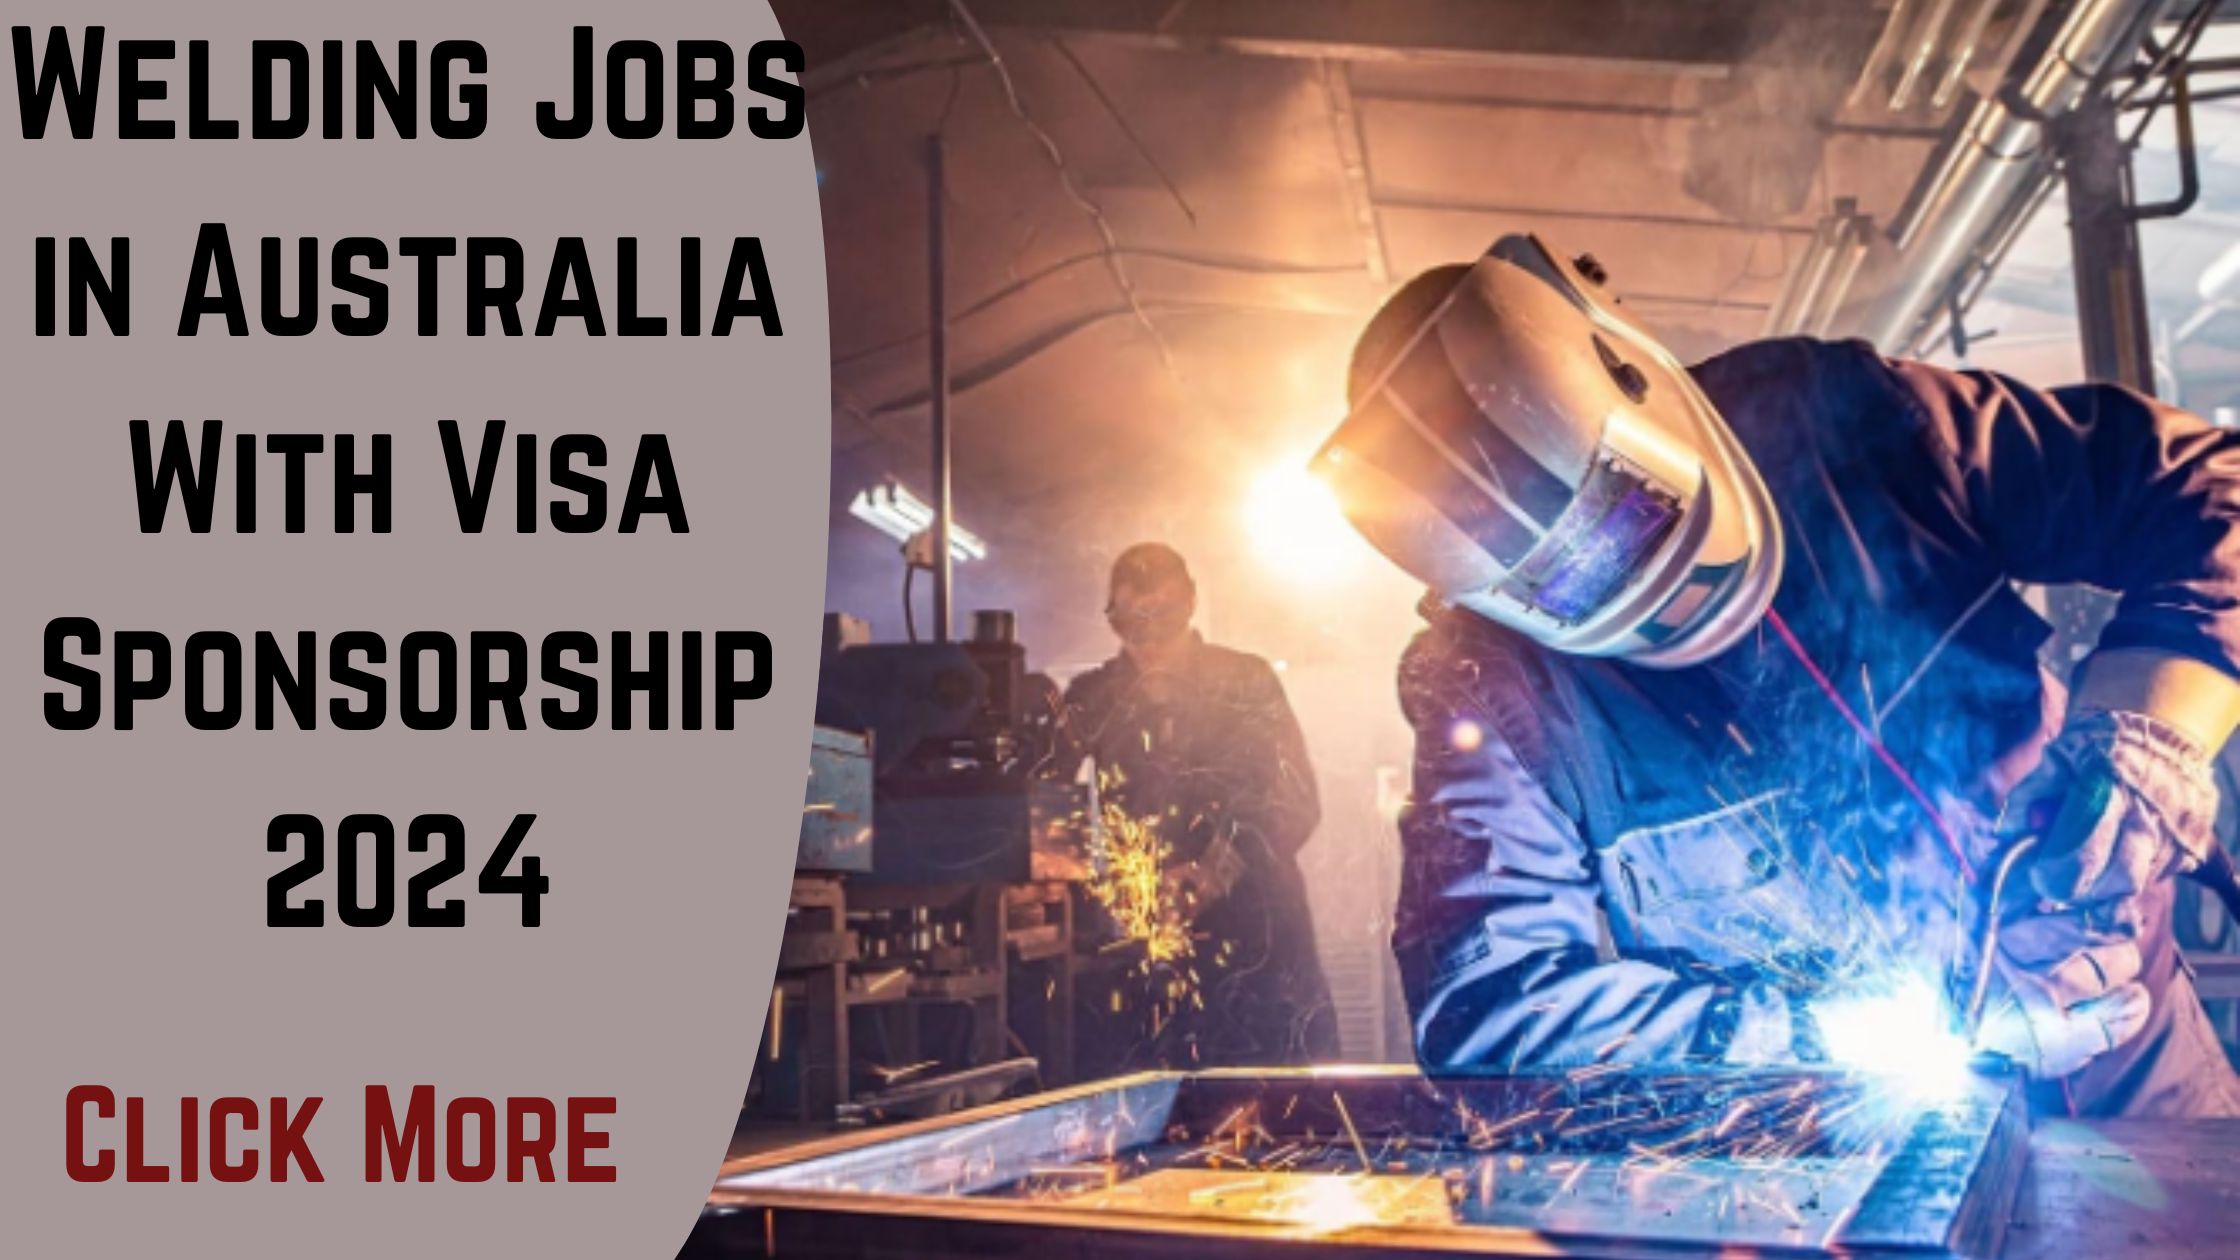 Welding Jobs in Australia With Visa Sponsorship 